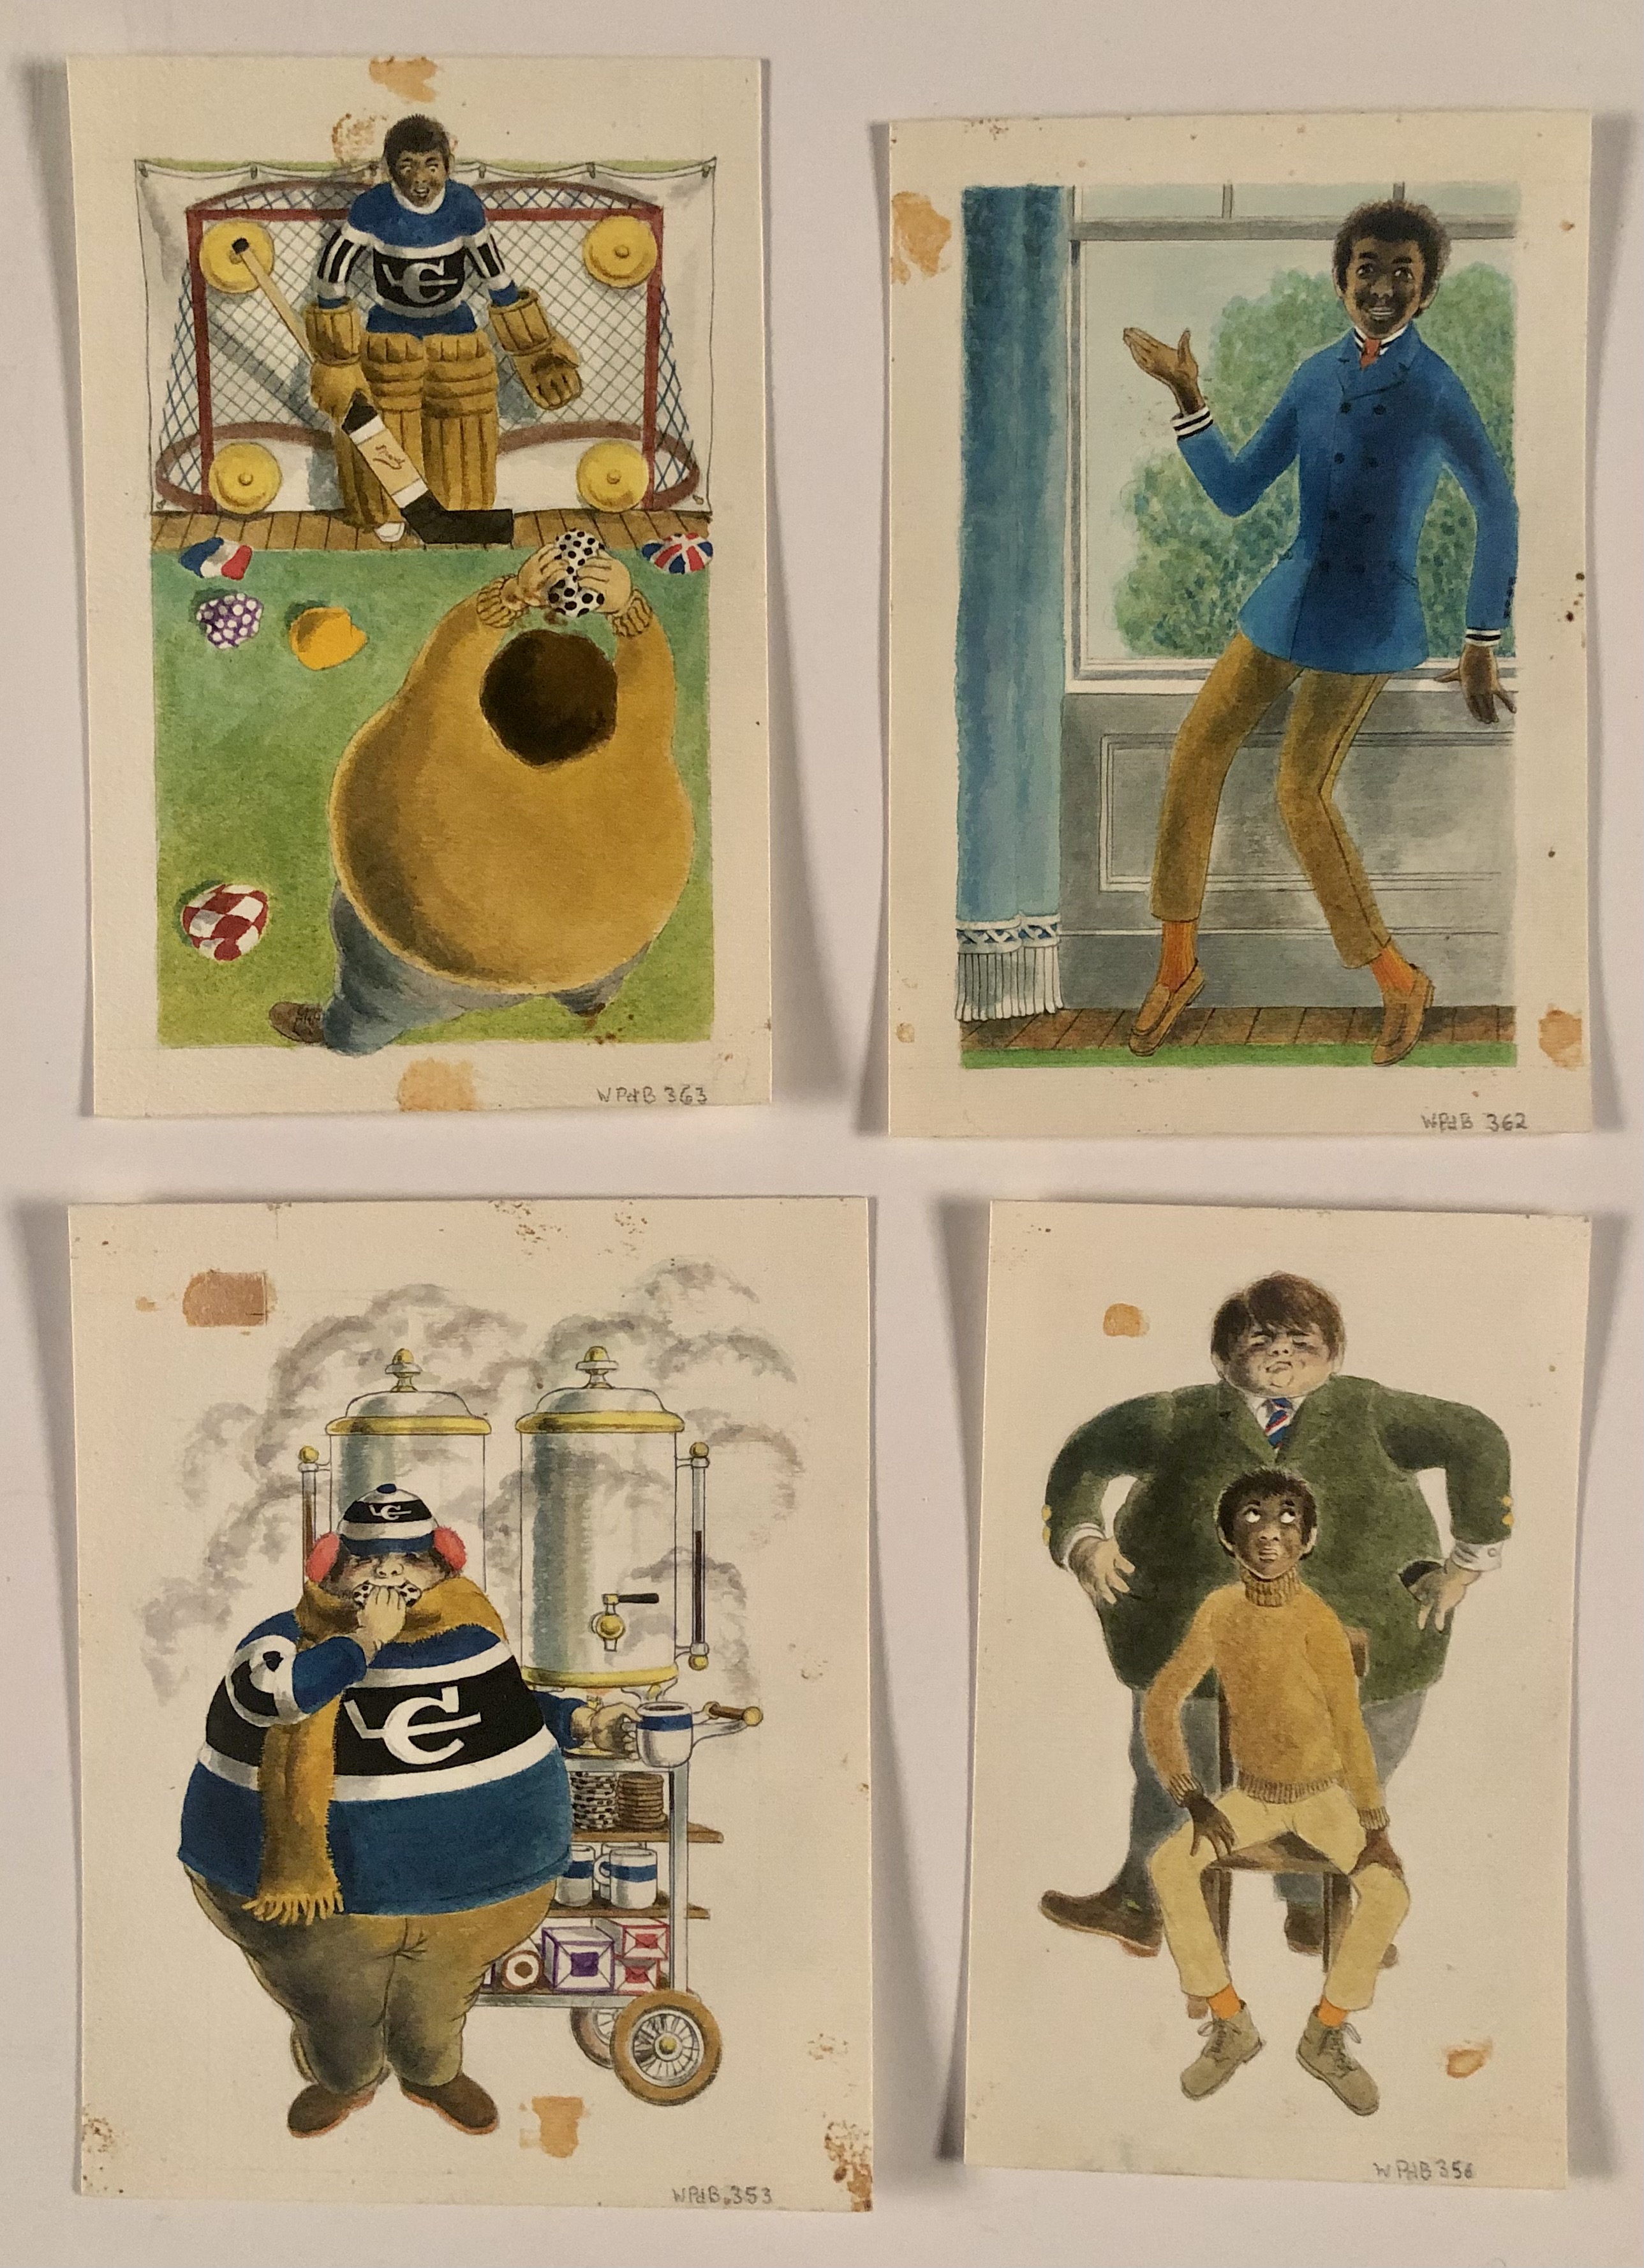 4 images - Porko and goalie; man leaning against window; Porko at hot chocolate cart; Porko standing above classmate